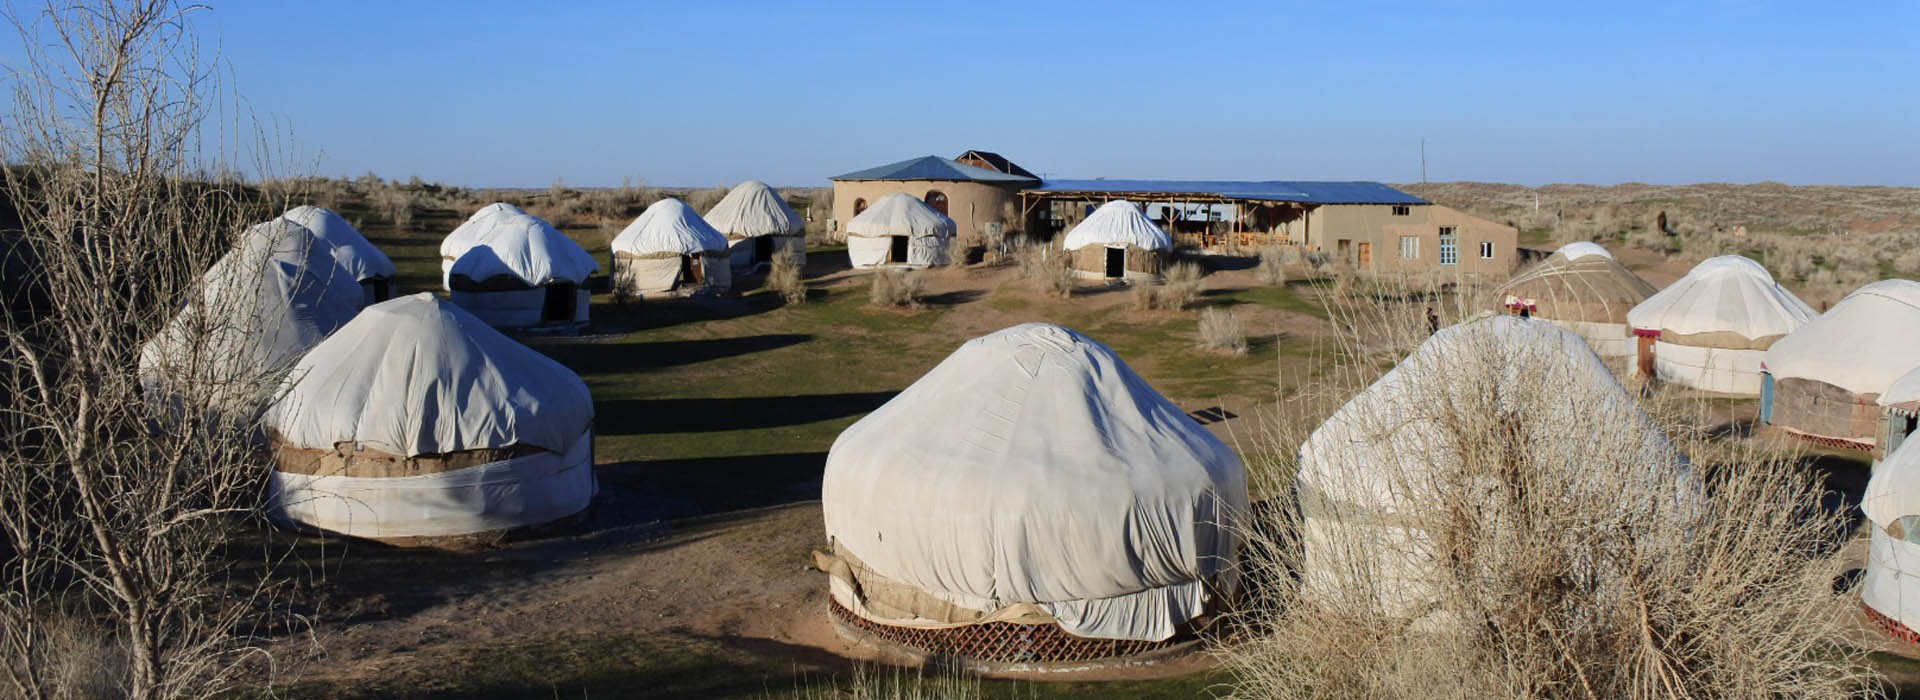 Visiter Le camp de yourte Aydar - Ouzbékistan